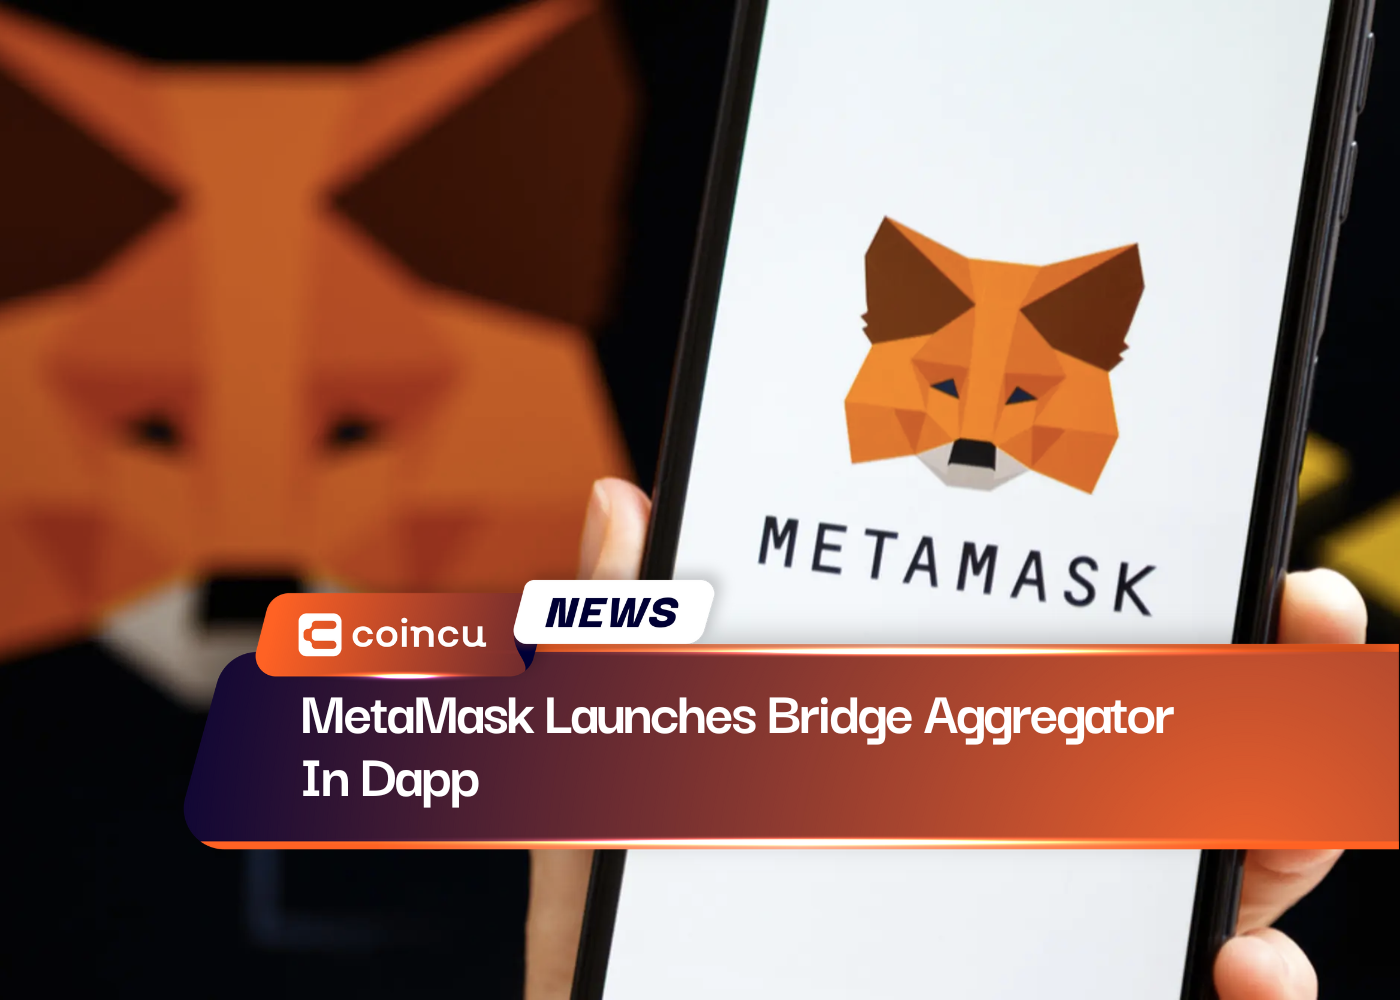 MetaMask Launches Bridge Aggregator In Dapp